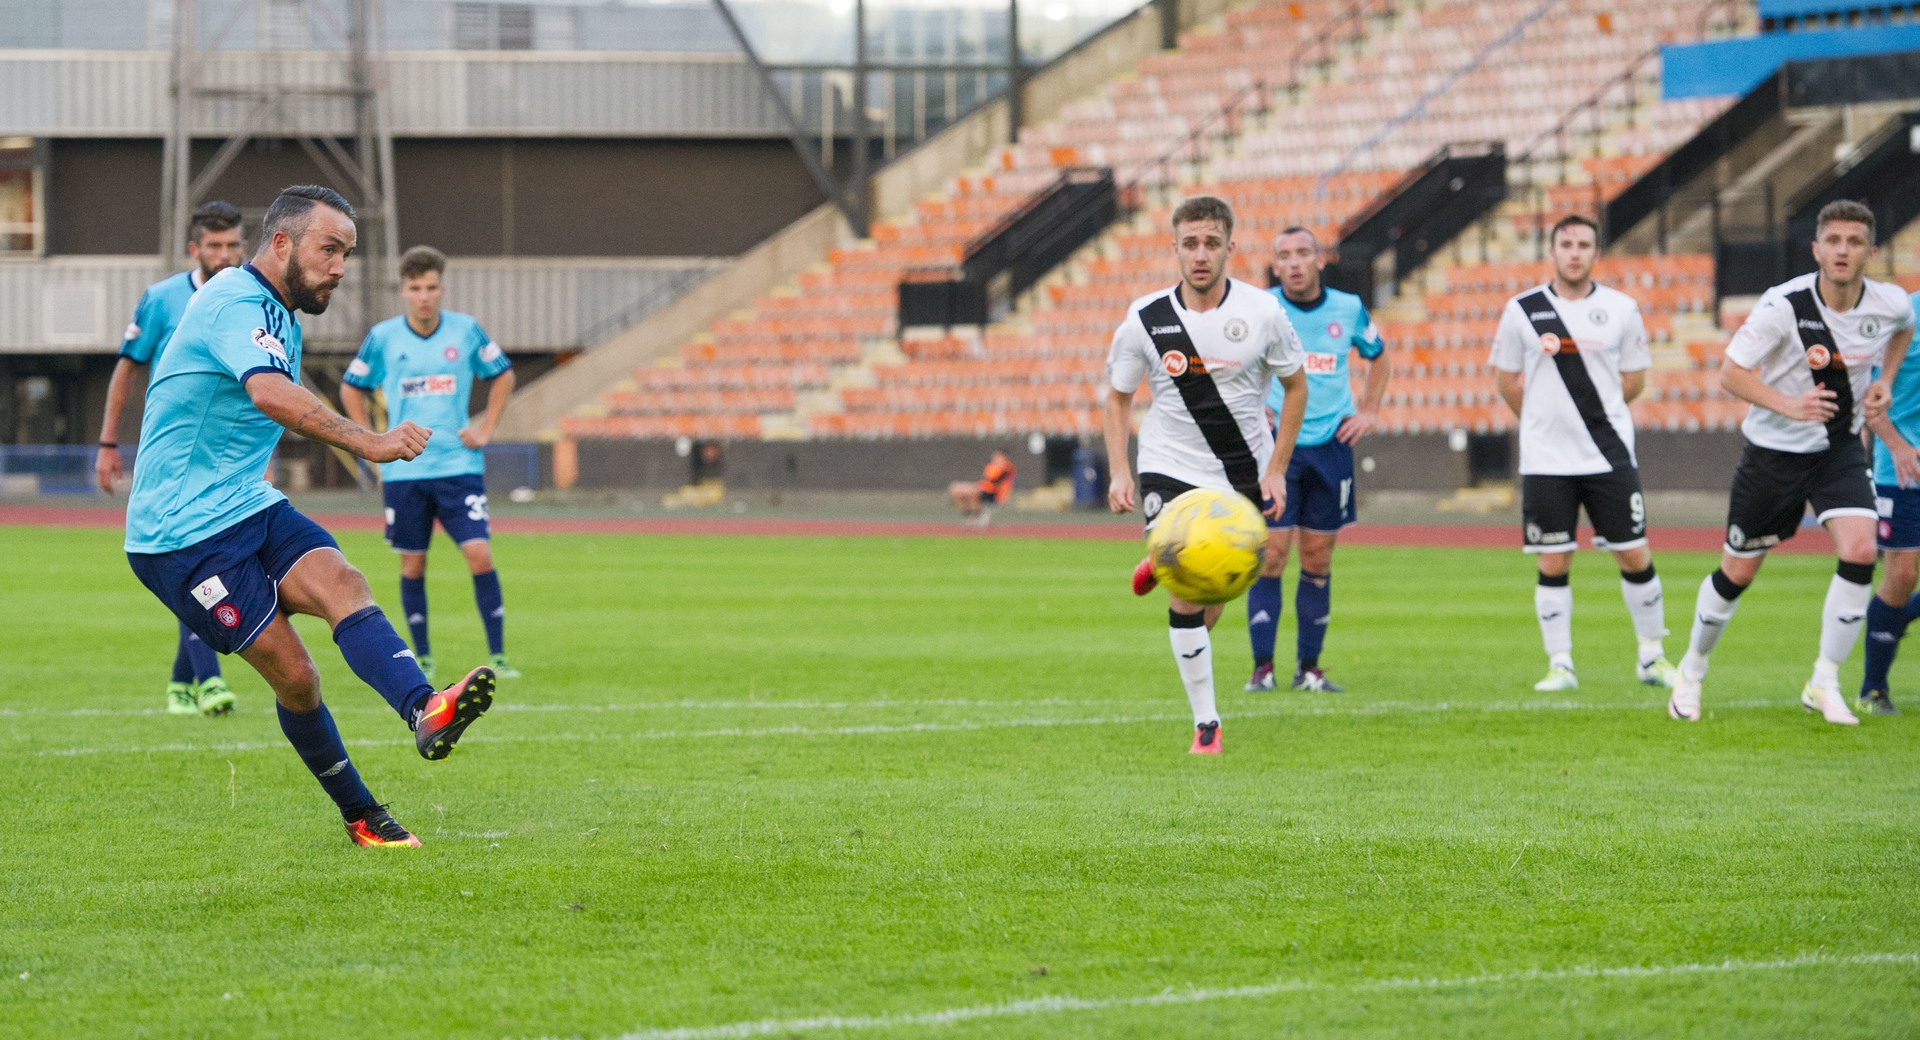 Dougie Imrie nets a penalty for Hamilton against Edinburgh City (now FC Edinburgh) in a 2016 League Cup group stage match.